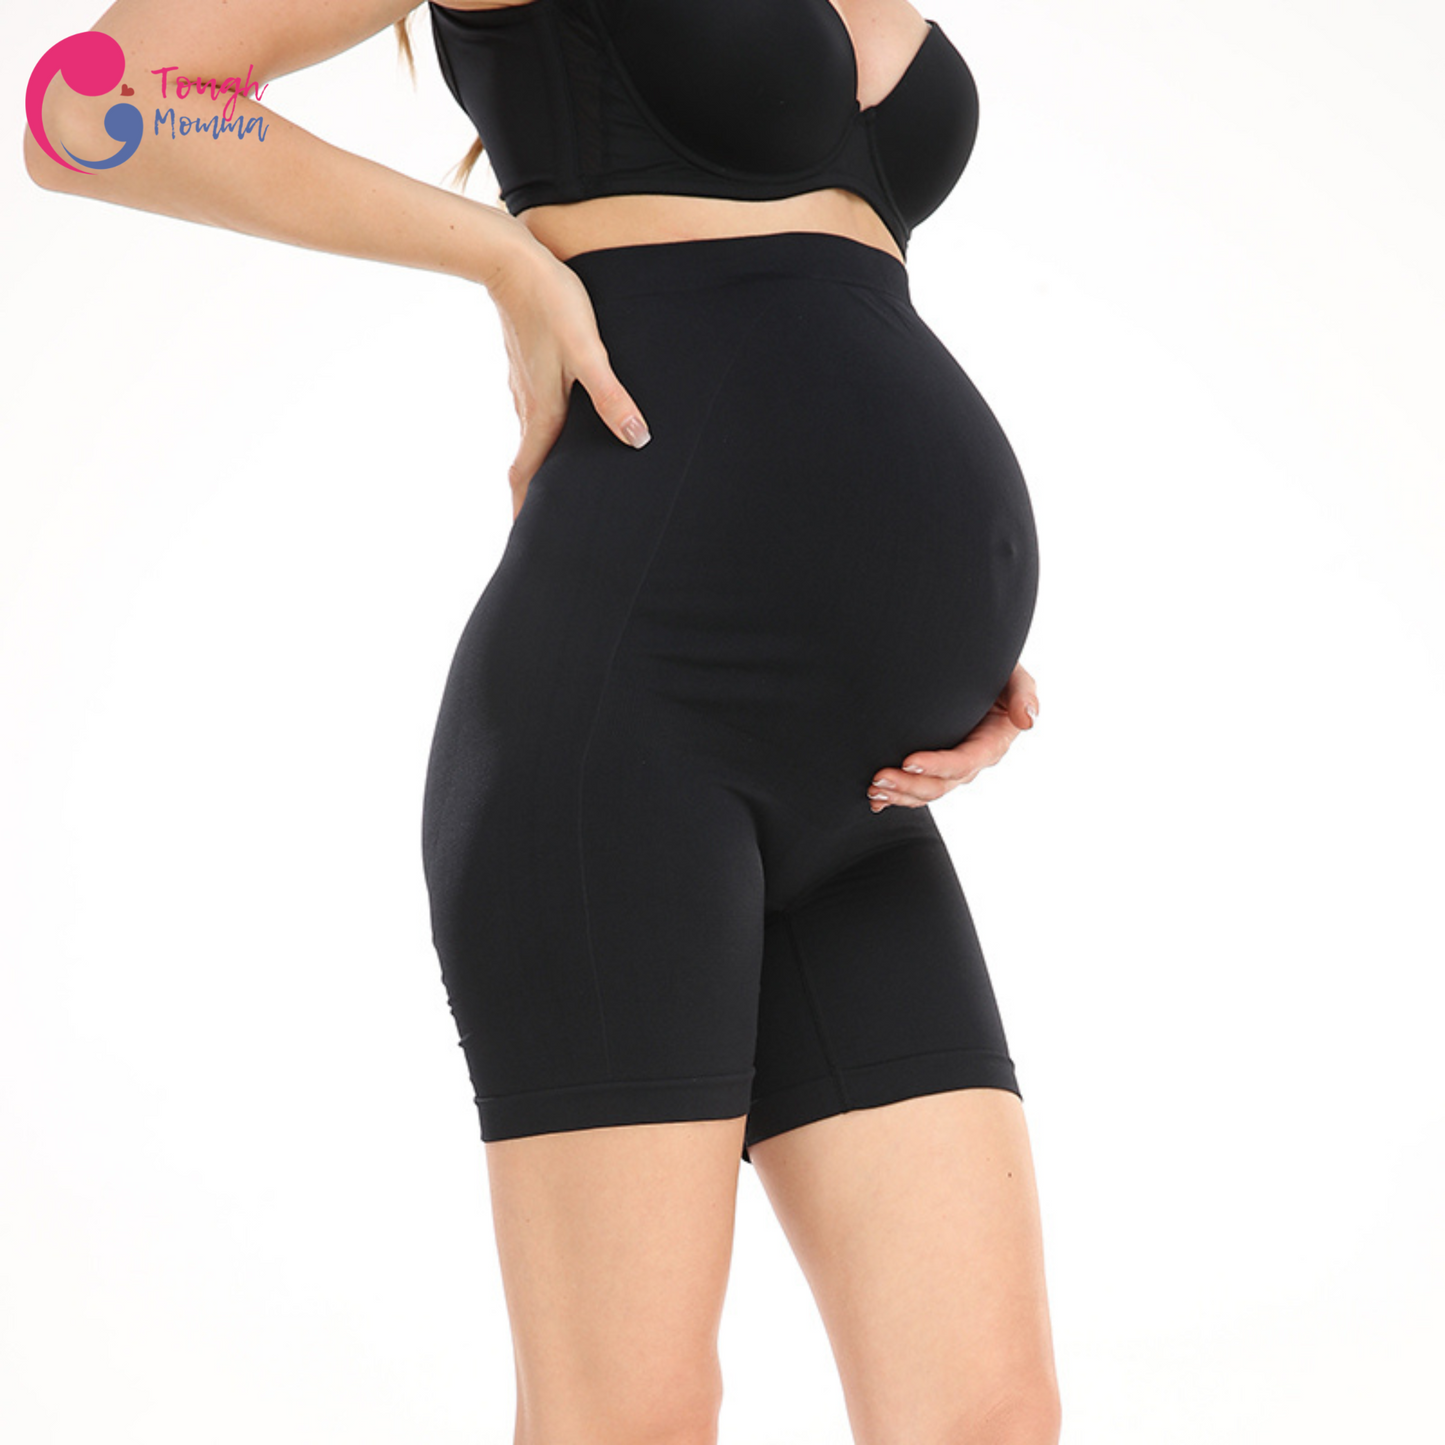 ToughMomma Erin Over the Bump Maternity Shorts